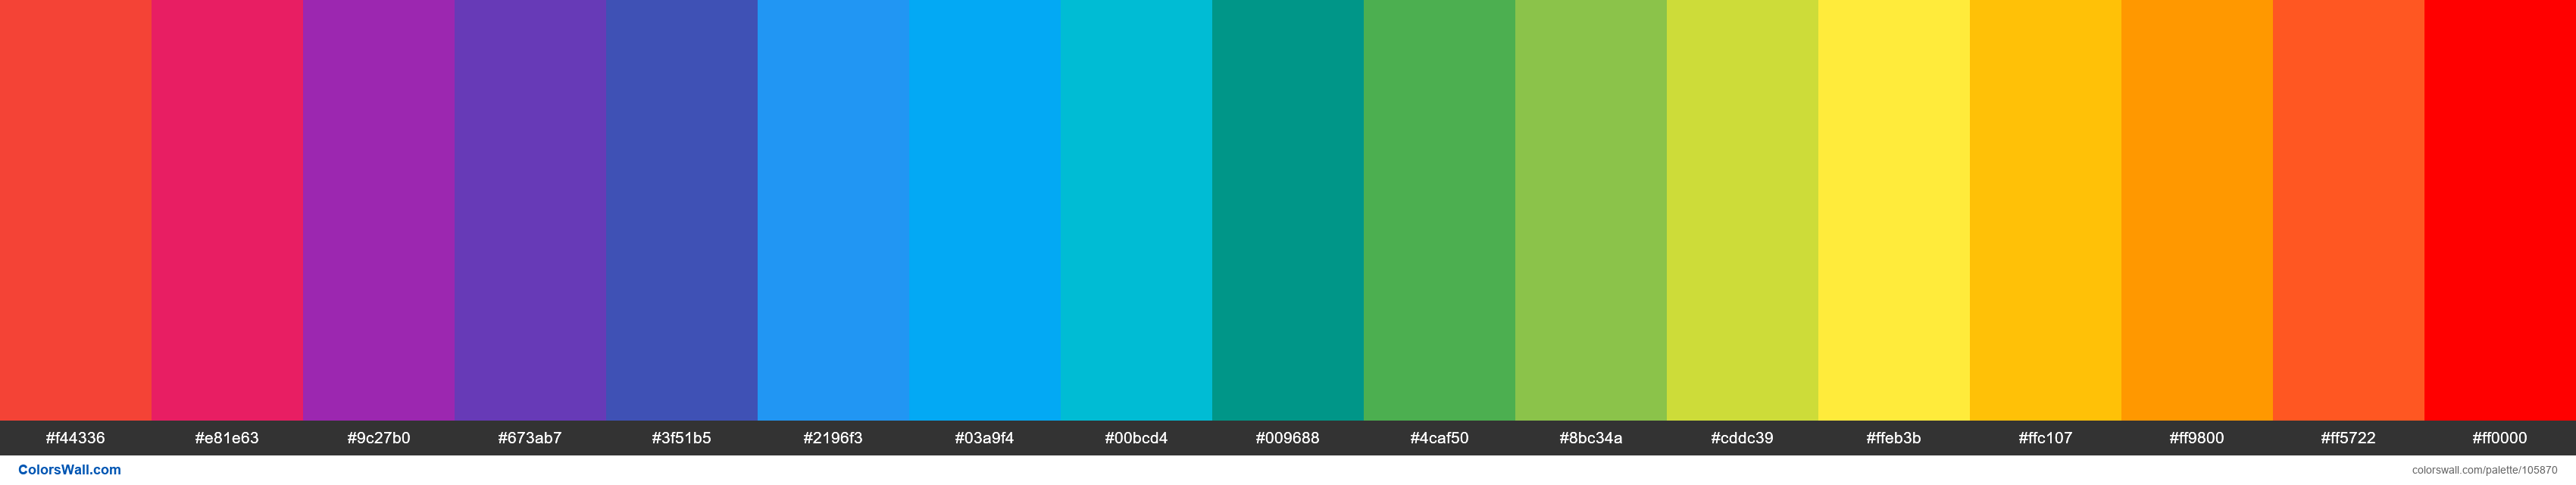 Material Design Color Palette (16 colors) (Red) - #105870